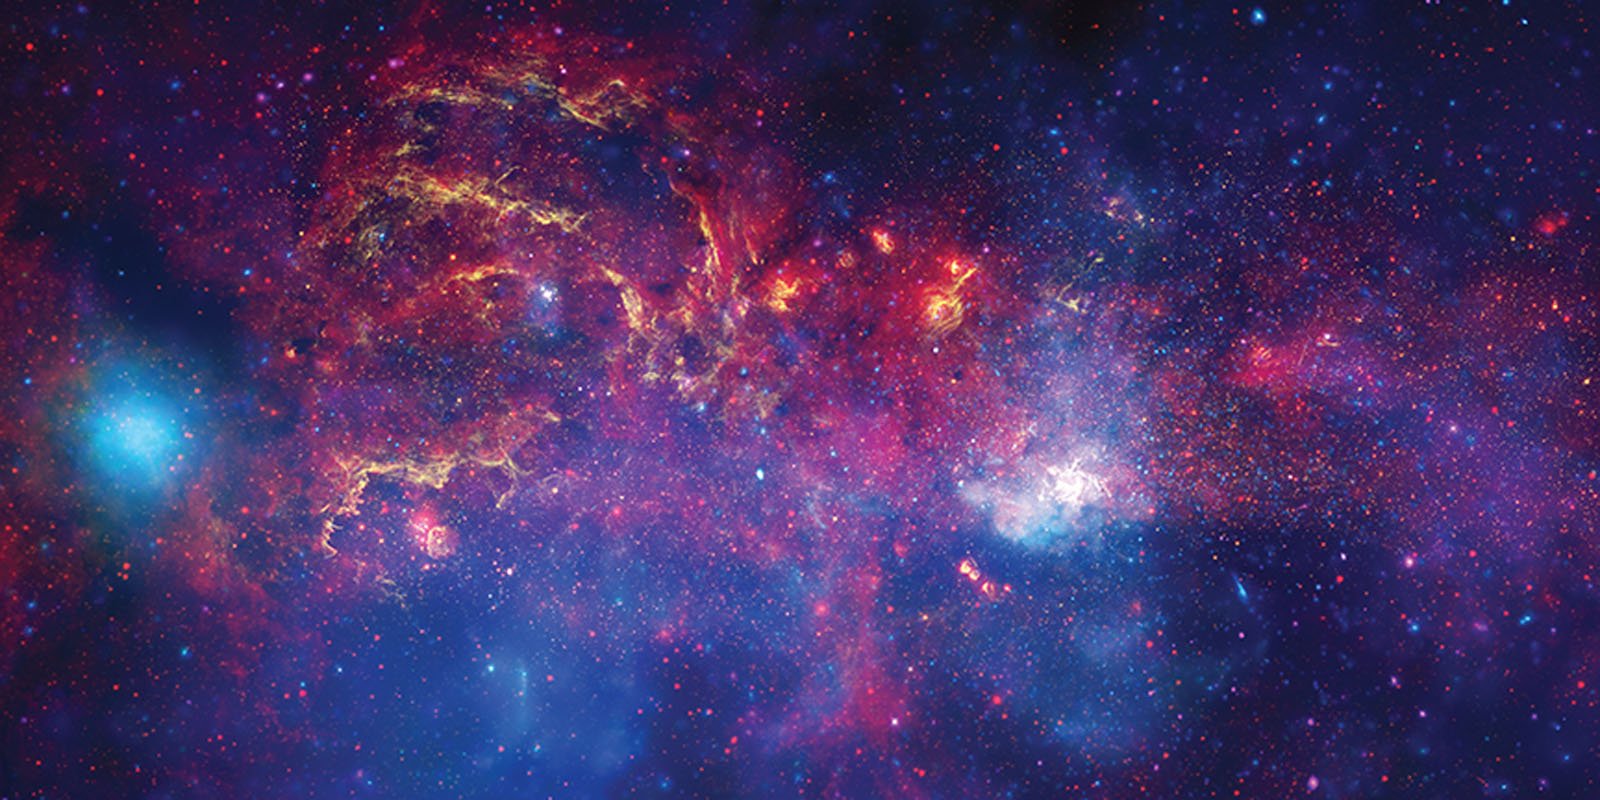 NASA Milky Way Photo Turned Into Sheet Music You Can Play